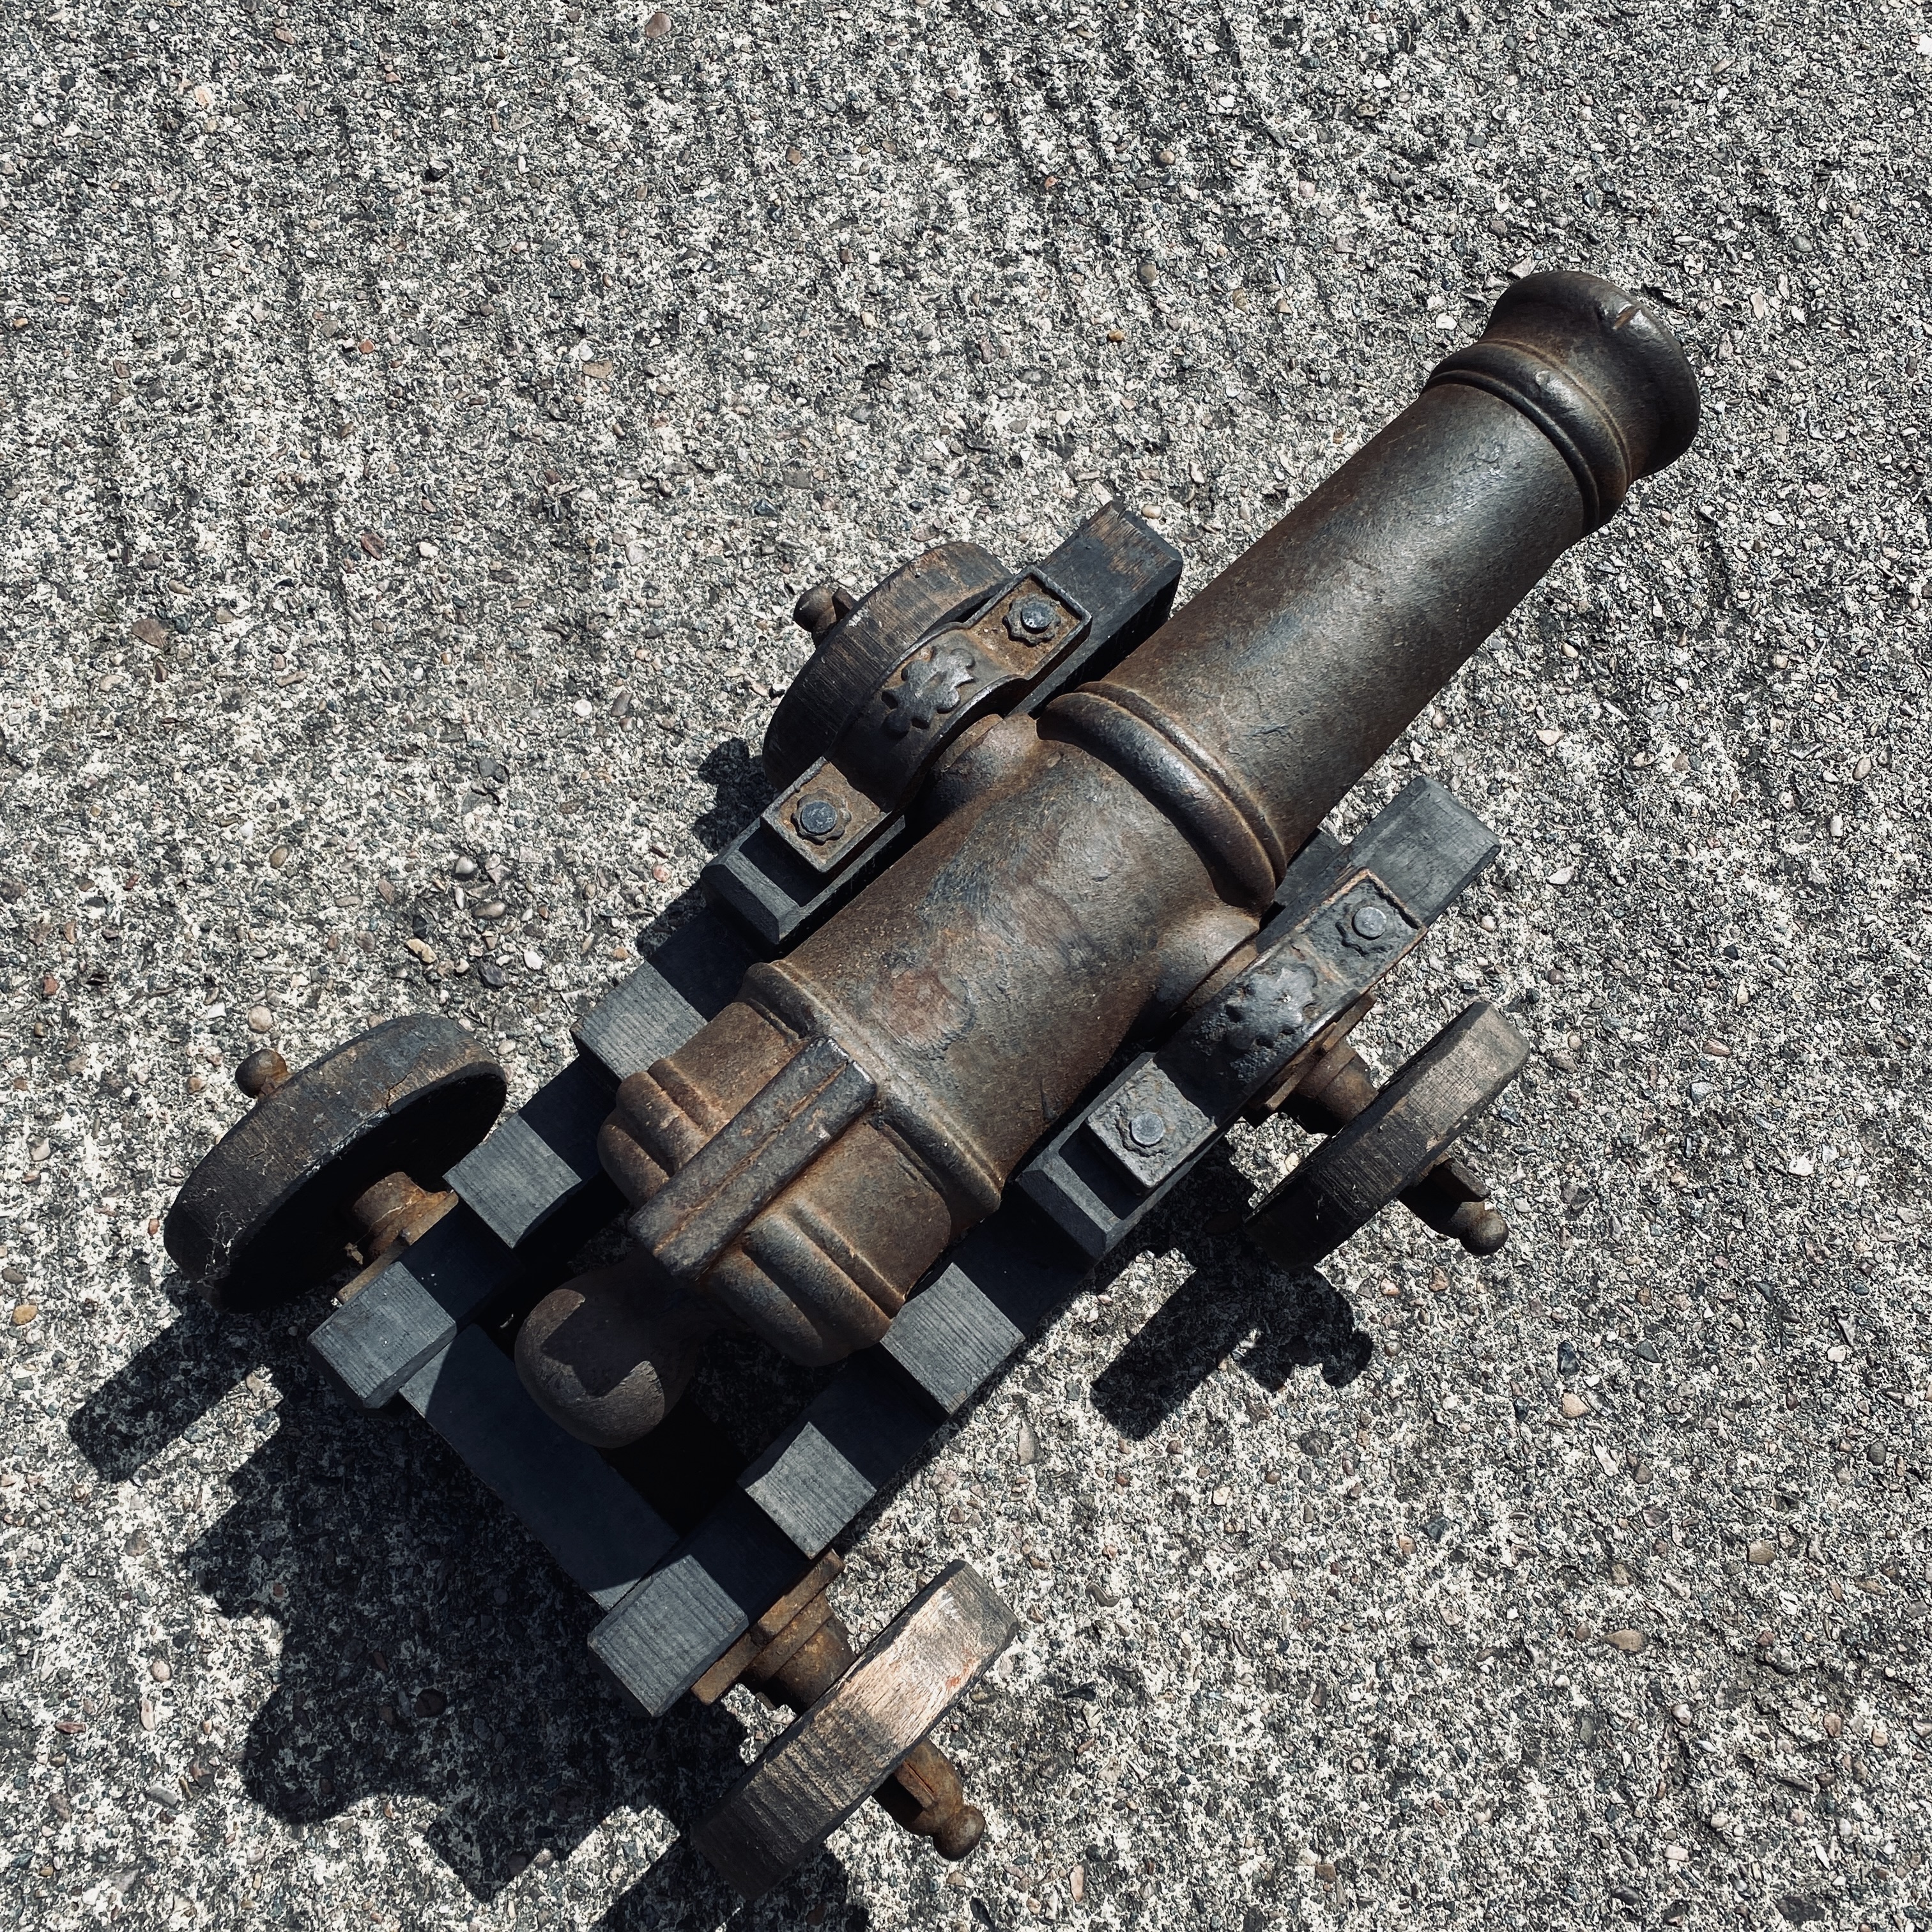 Replica 17th Century Cannon - 19" Cast Iron Barrel, Wooden Stock & Wheels. - Image 3 of 3